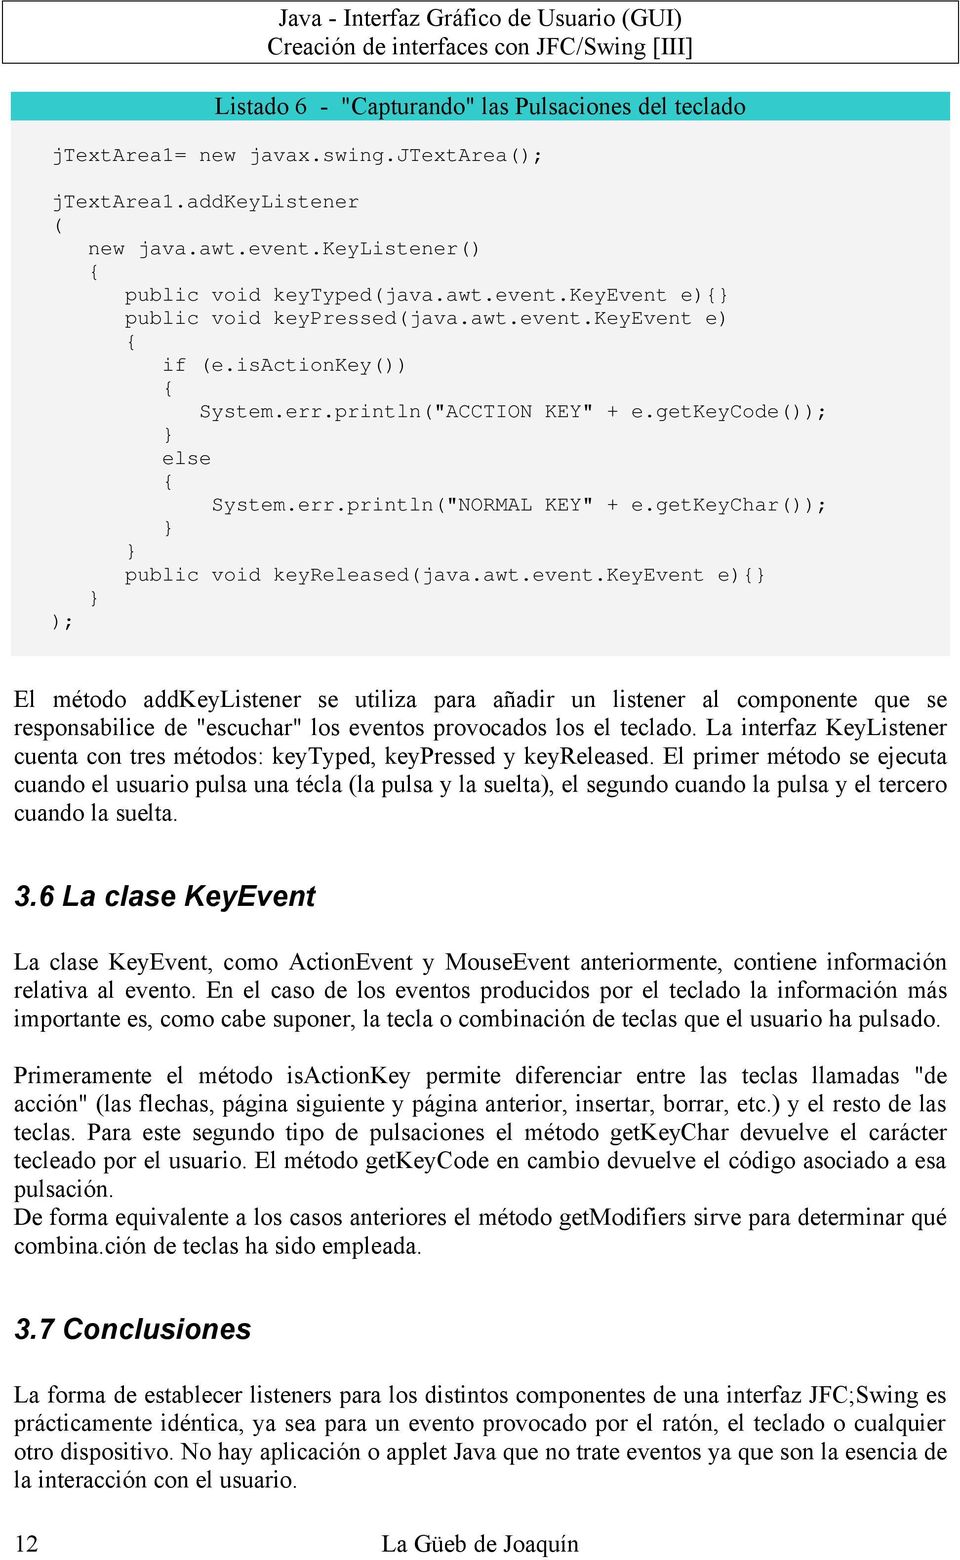 La interfaz KeyListener cuenta con tres métodos: keytyped, keypressed y keyreleased.